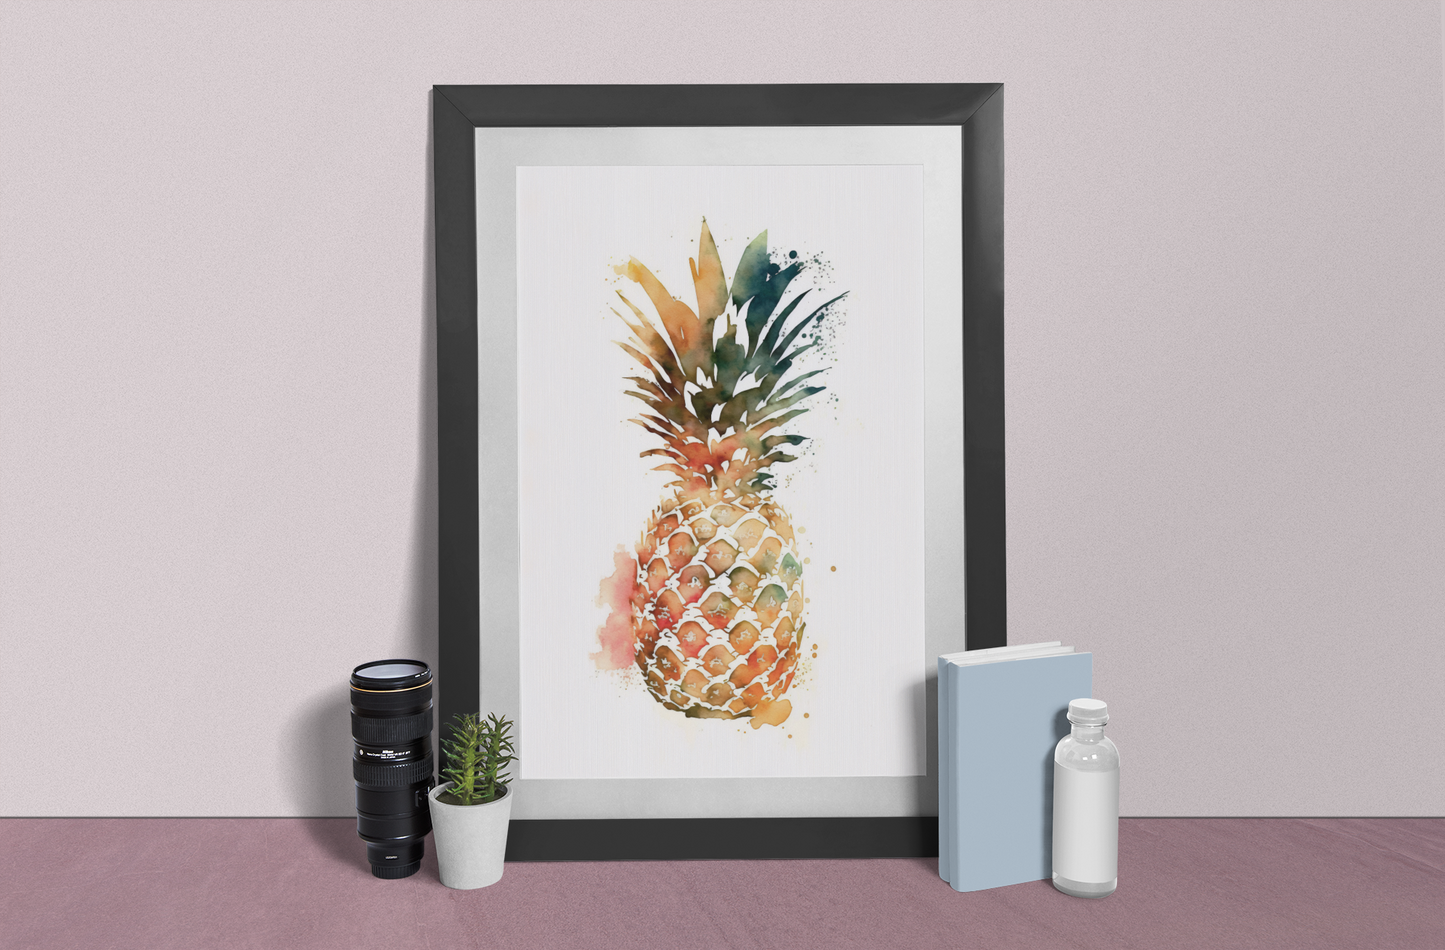 Solo Pineapple - A Minimalist Masterpiece - Satin Posters